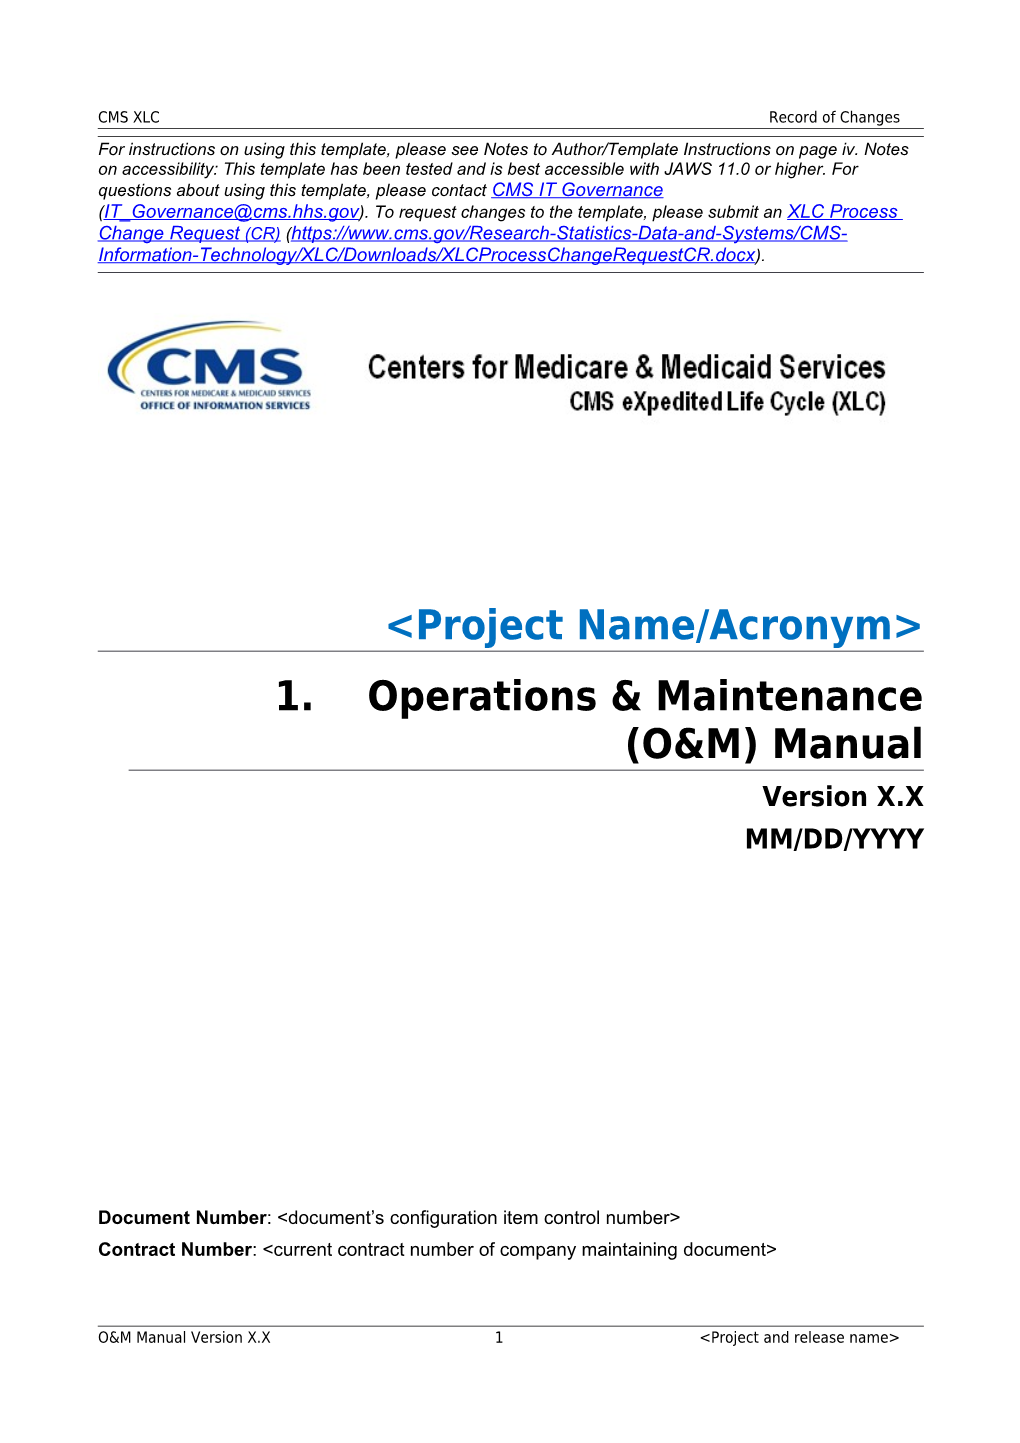 Operations & Maintenance Manual (O&M Manual) Template